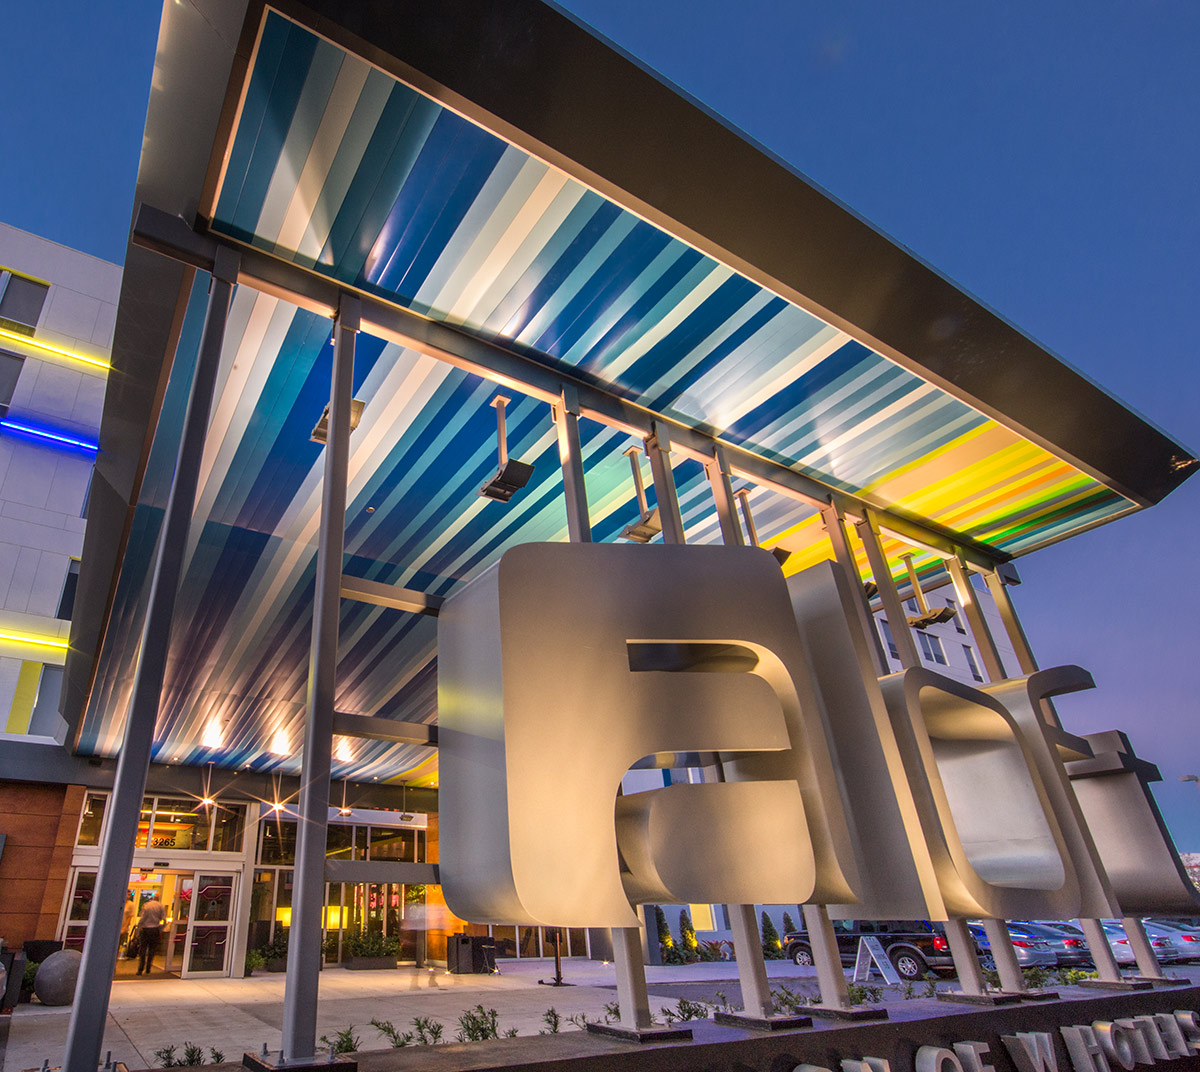 Architectural dusk entrance view at the Aloft Doral - Miami, FL